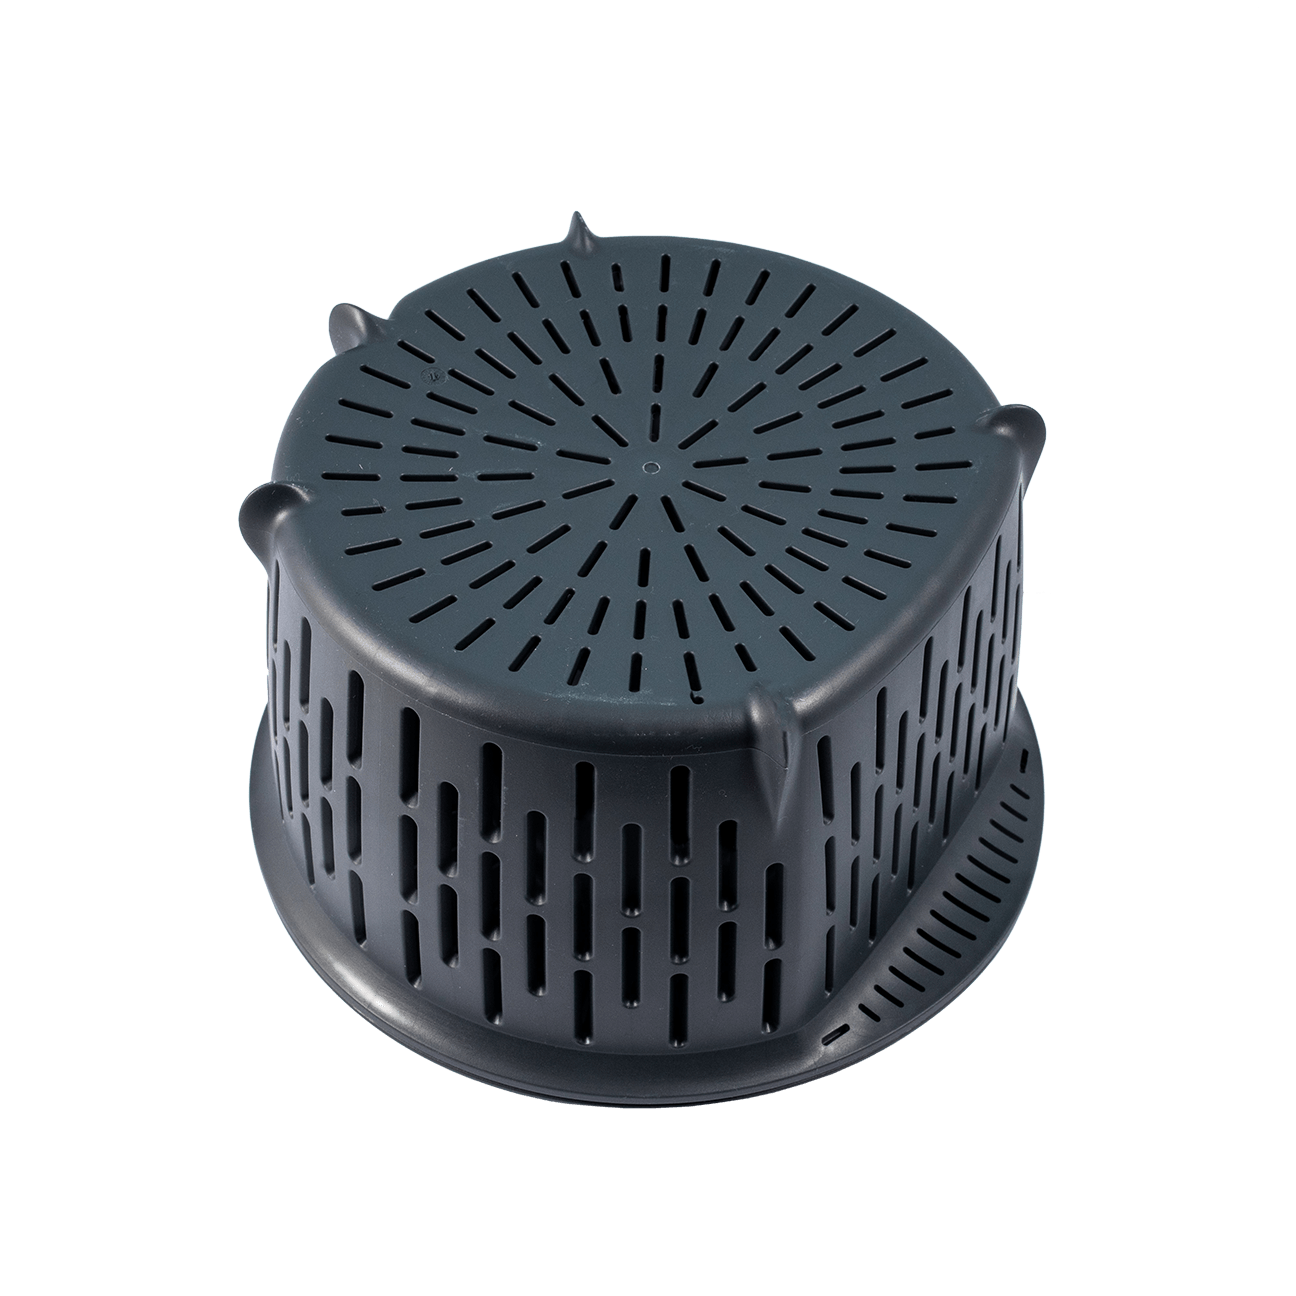 Thermomix-New-Zealand Vorwerk TM6 Simmering Basket With Lid Parts